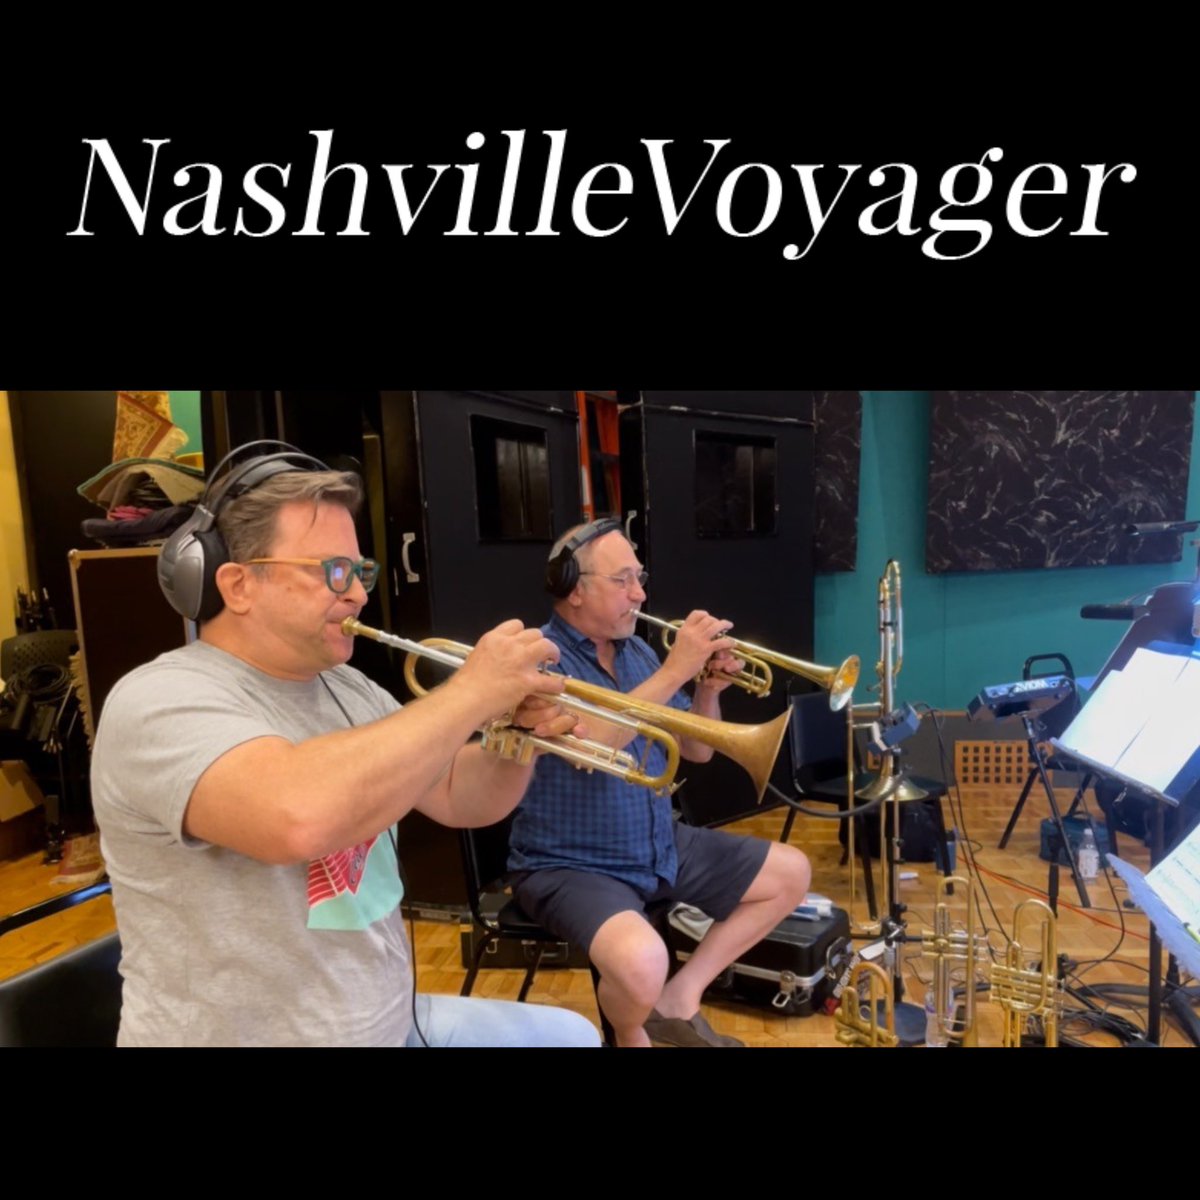 #TBT to my conversation with Nashville Voyager 

Learn more here: nashvillevoyager.com/interview/conv…

#nashvillevoyager #throwbackthursday #nashville #bts #stevepatrick #behindthemusic #trumpetlife #trumpetplayer #bachbrass #patrickmouthpieces #nashvillescene